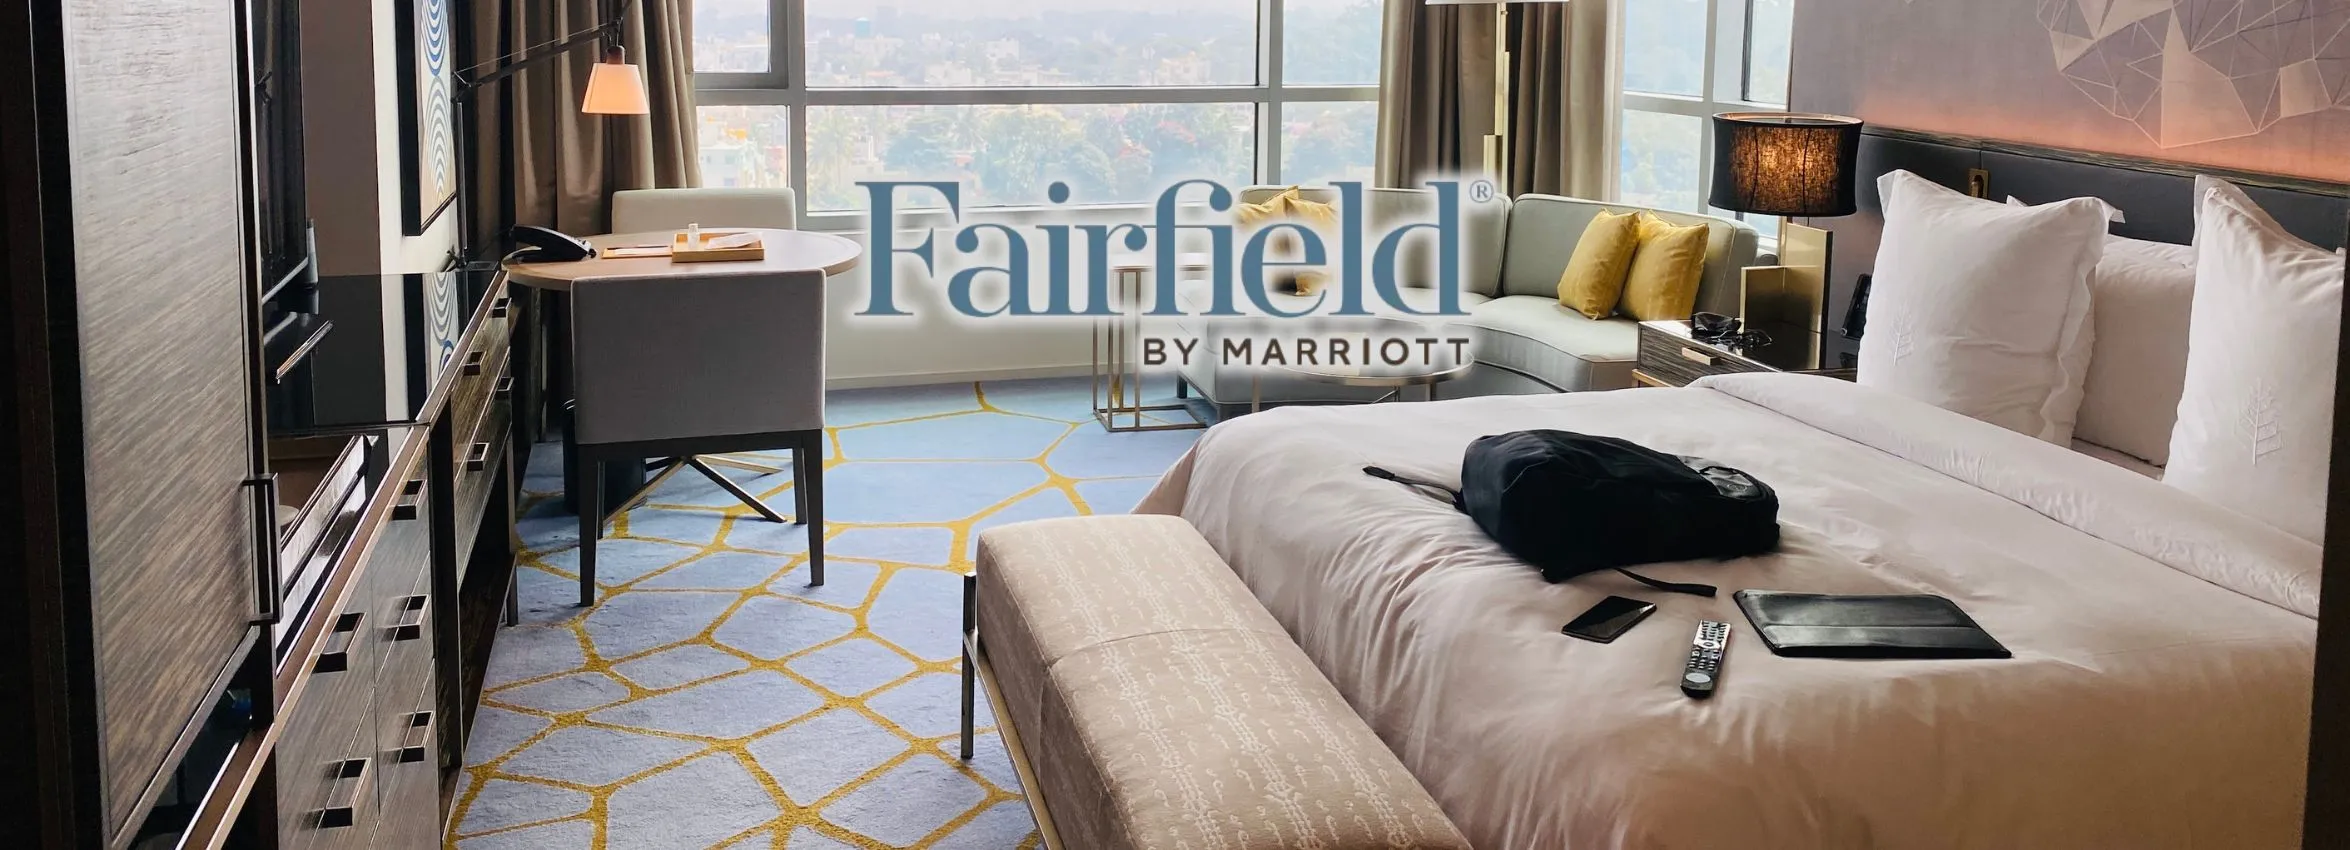 Fairfield-by-Marriott_Desktop_ET-